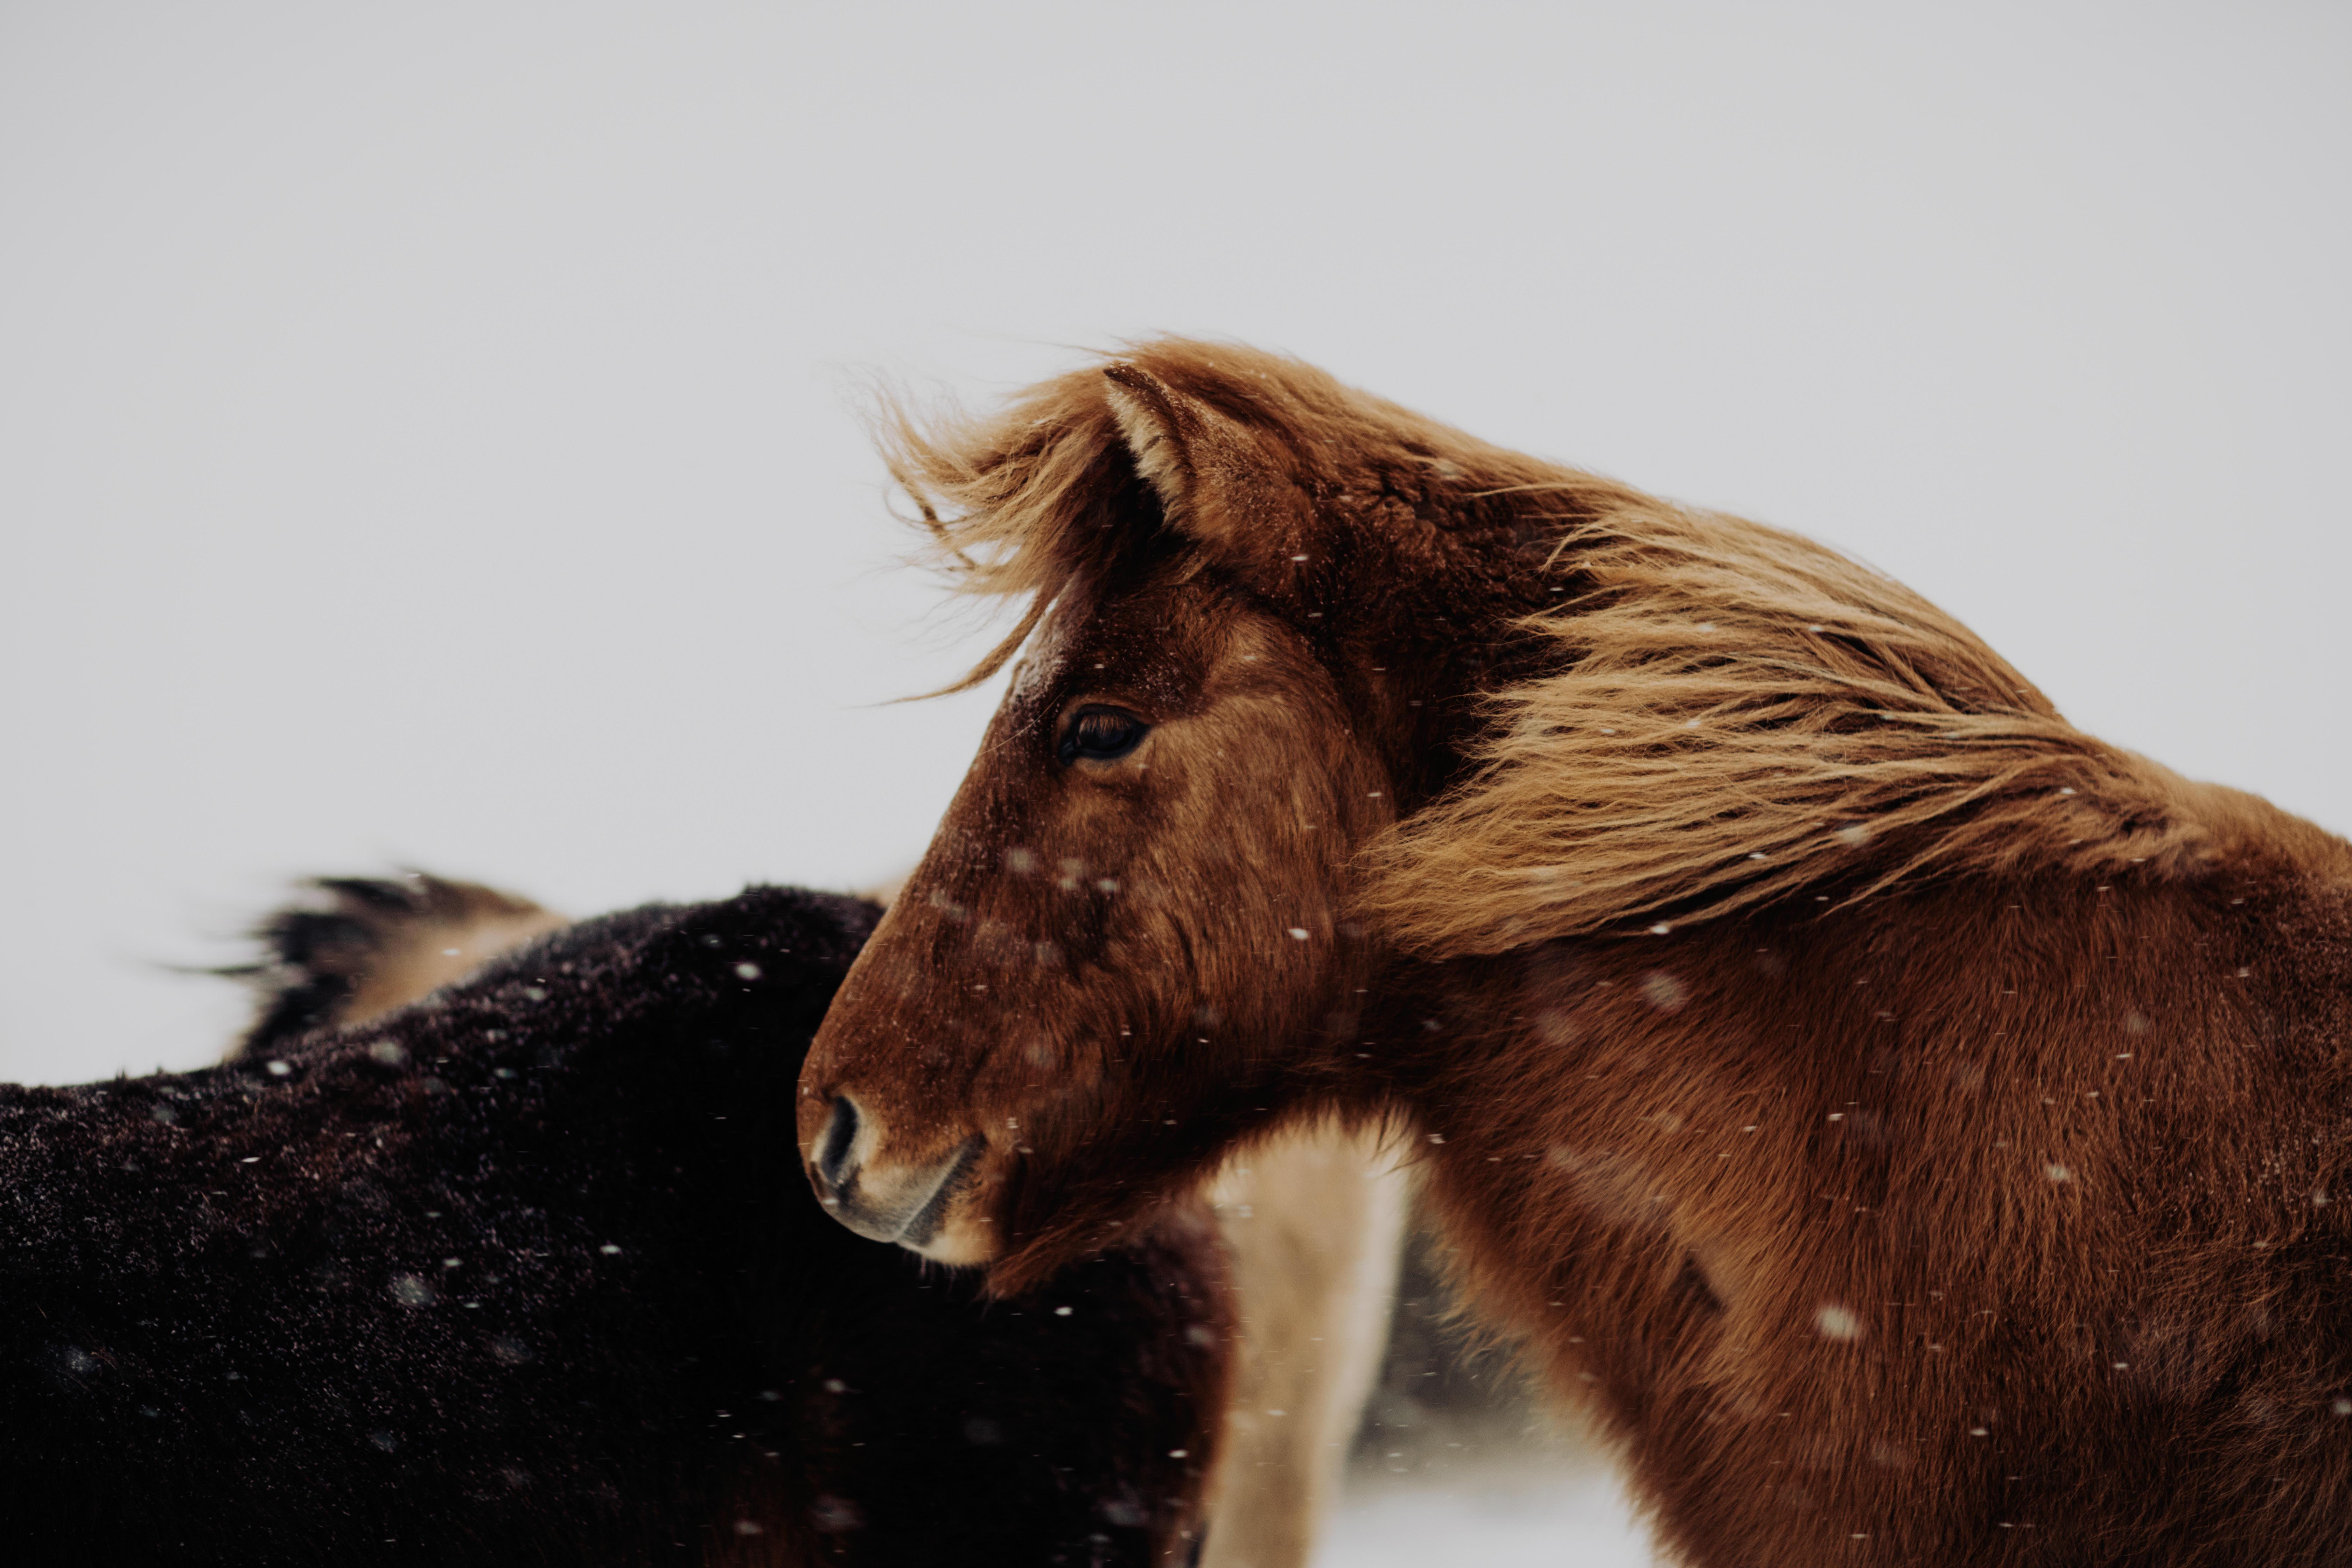  Wild Horse, Colored Horse Photography, Horse Fine Art Prints, Horses-Bernie